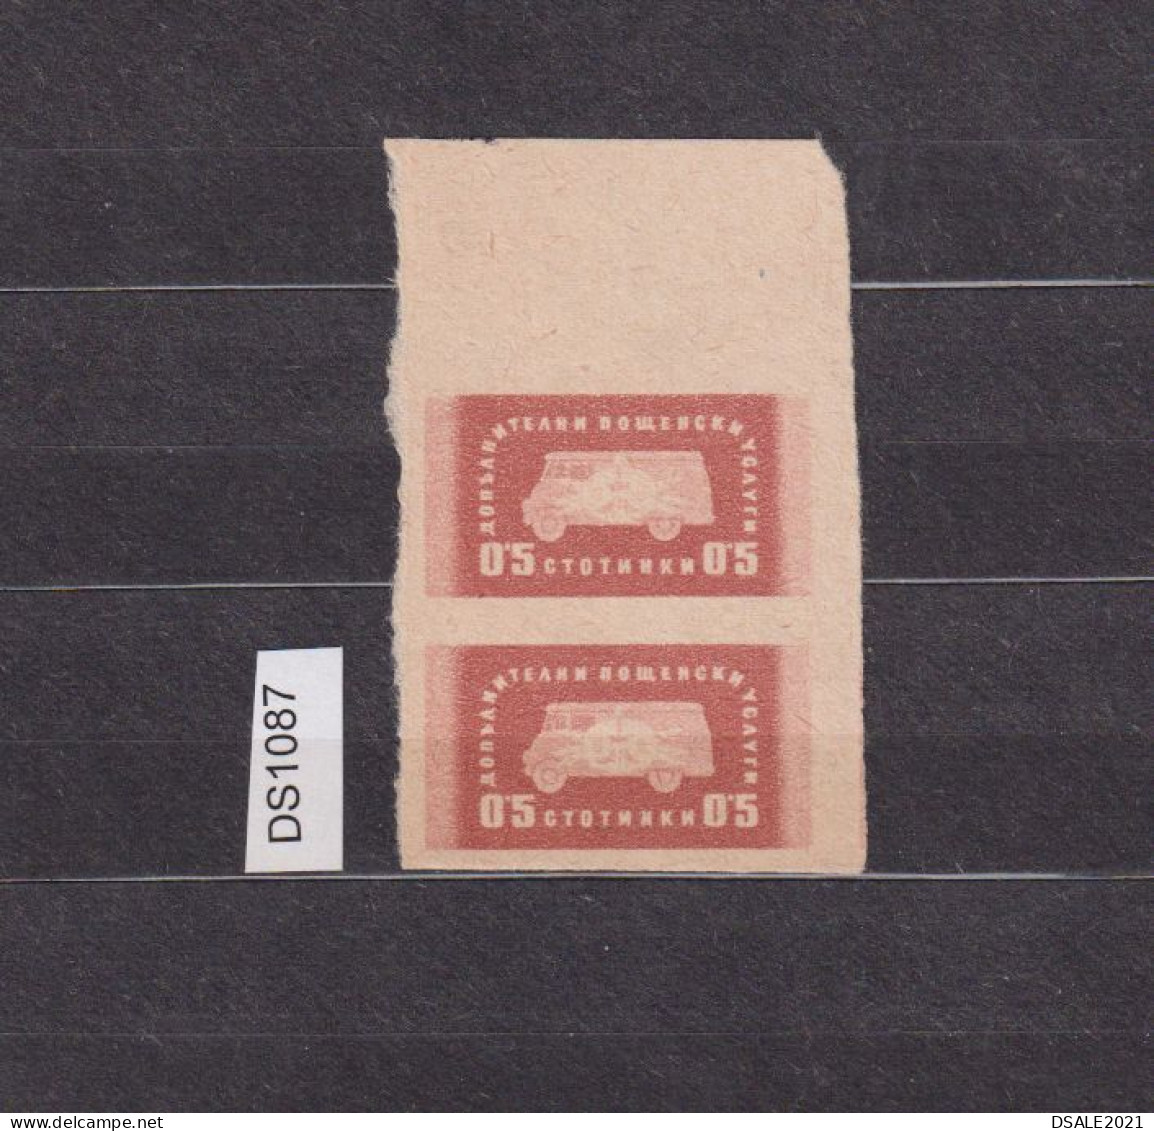 Bulgaria Bulgarie Bulgarien 1960s Additional Postal Service Fee Tax 2x0.50st. Stamps Pair Imperf. Unused NO GUM (ds1078) - Dienstzegels